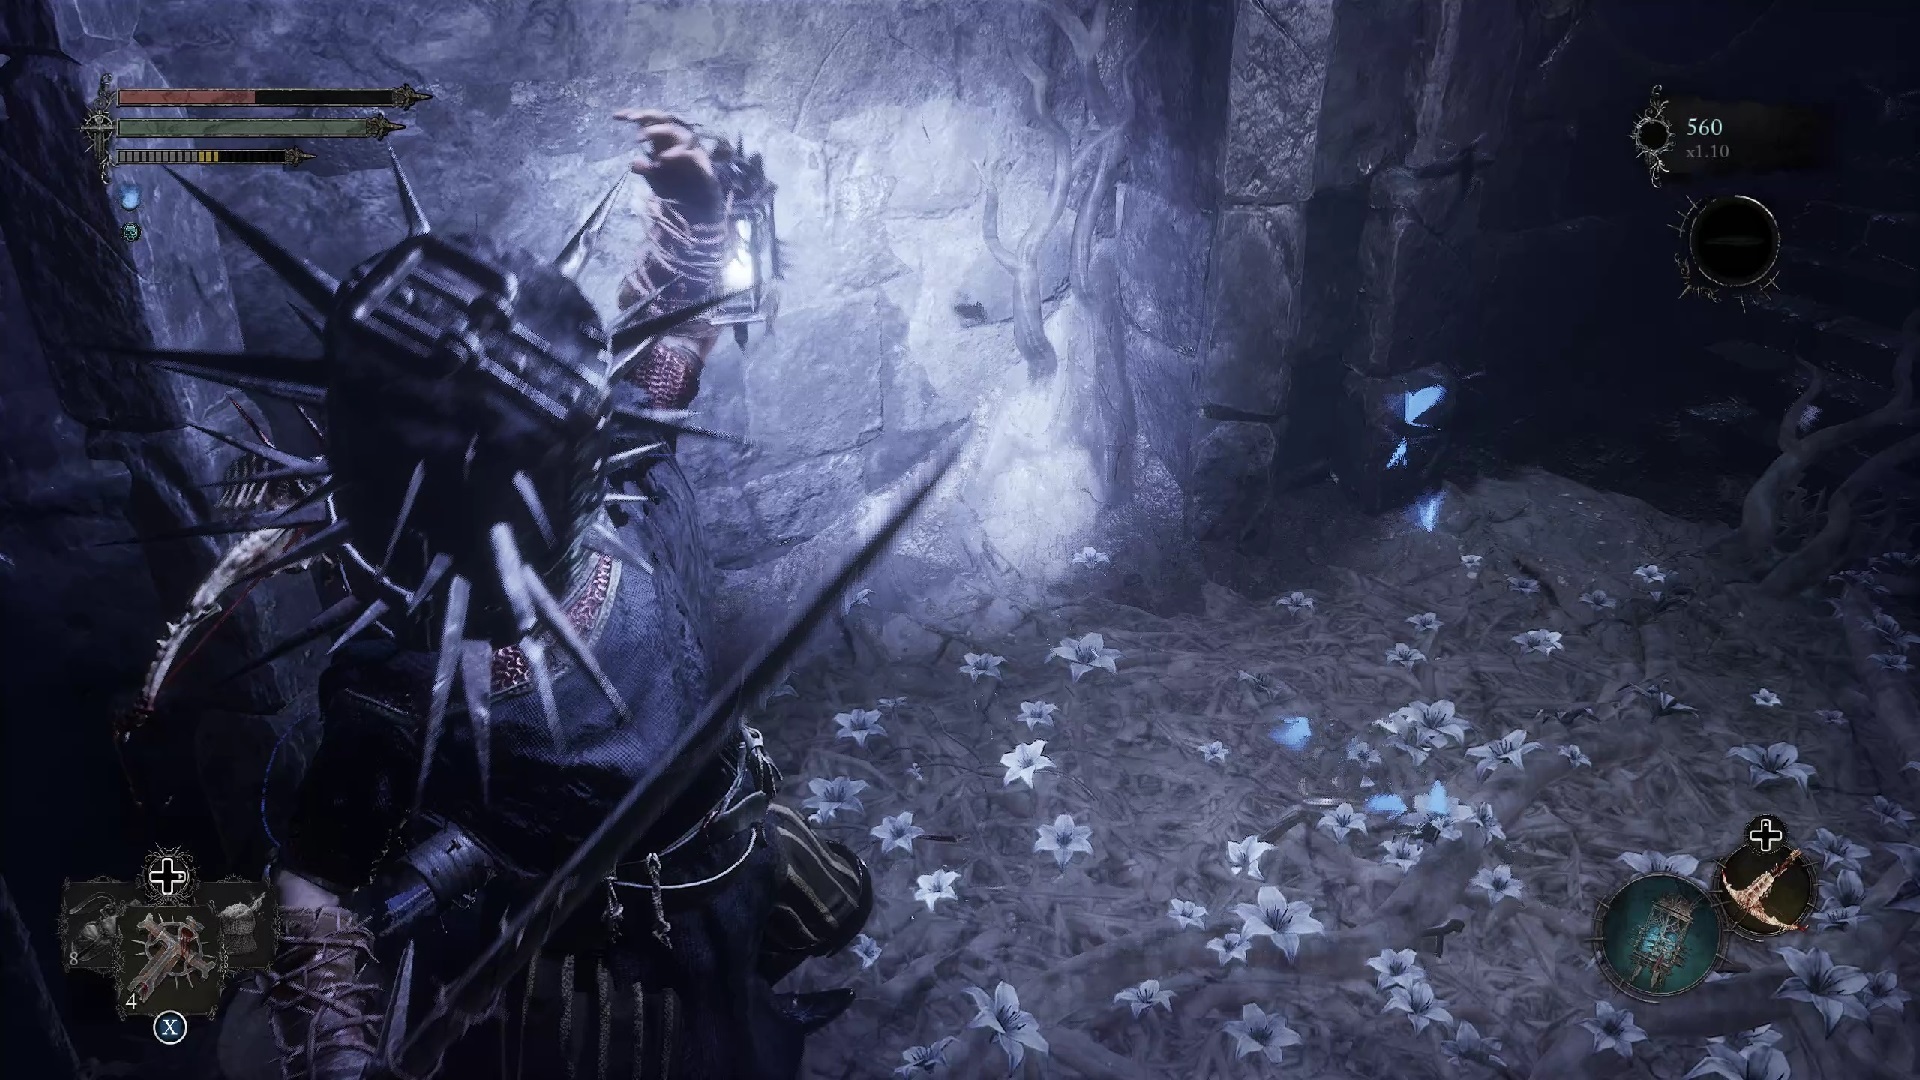 Lords of the Fallen: Is It A Soulslike Game?